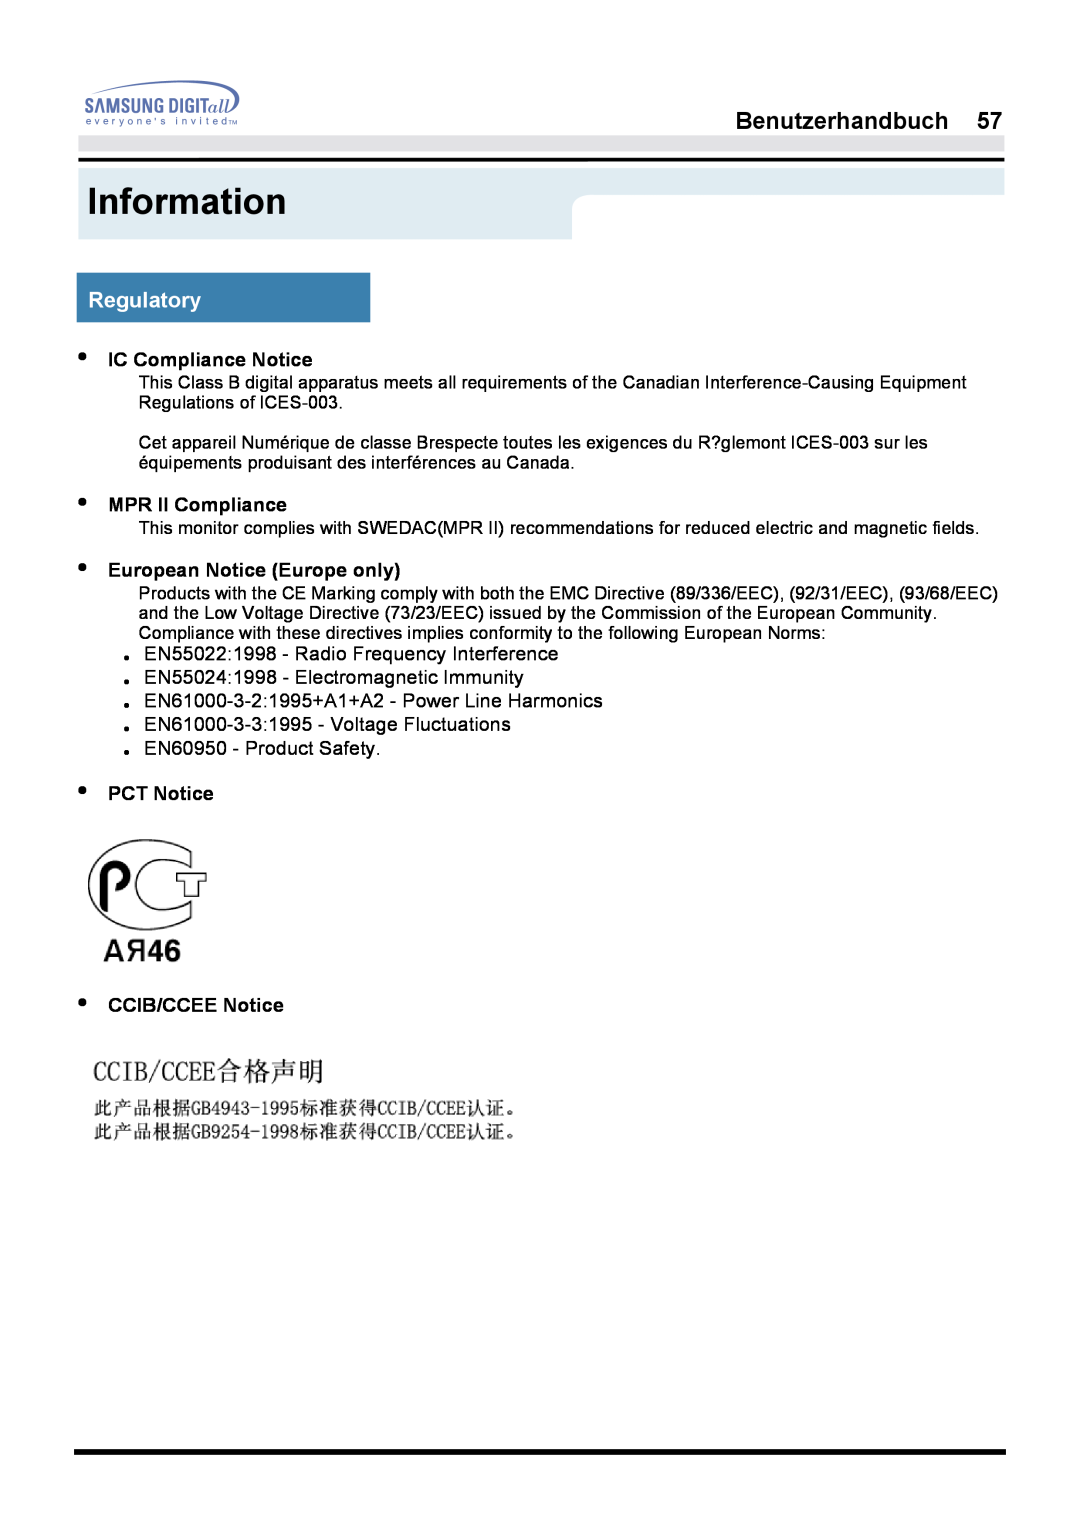 Samsung GH17LSSN/EDC, GH17HSSN/EDC manual Information, Benutzerhandbuch, Regulatory, IC Compliance Notice, MPR II Compliance 